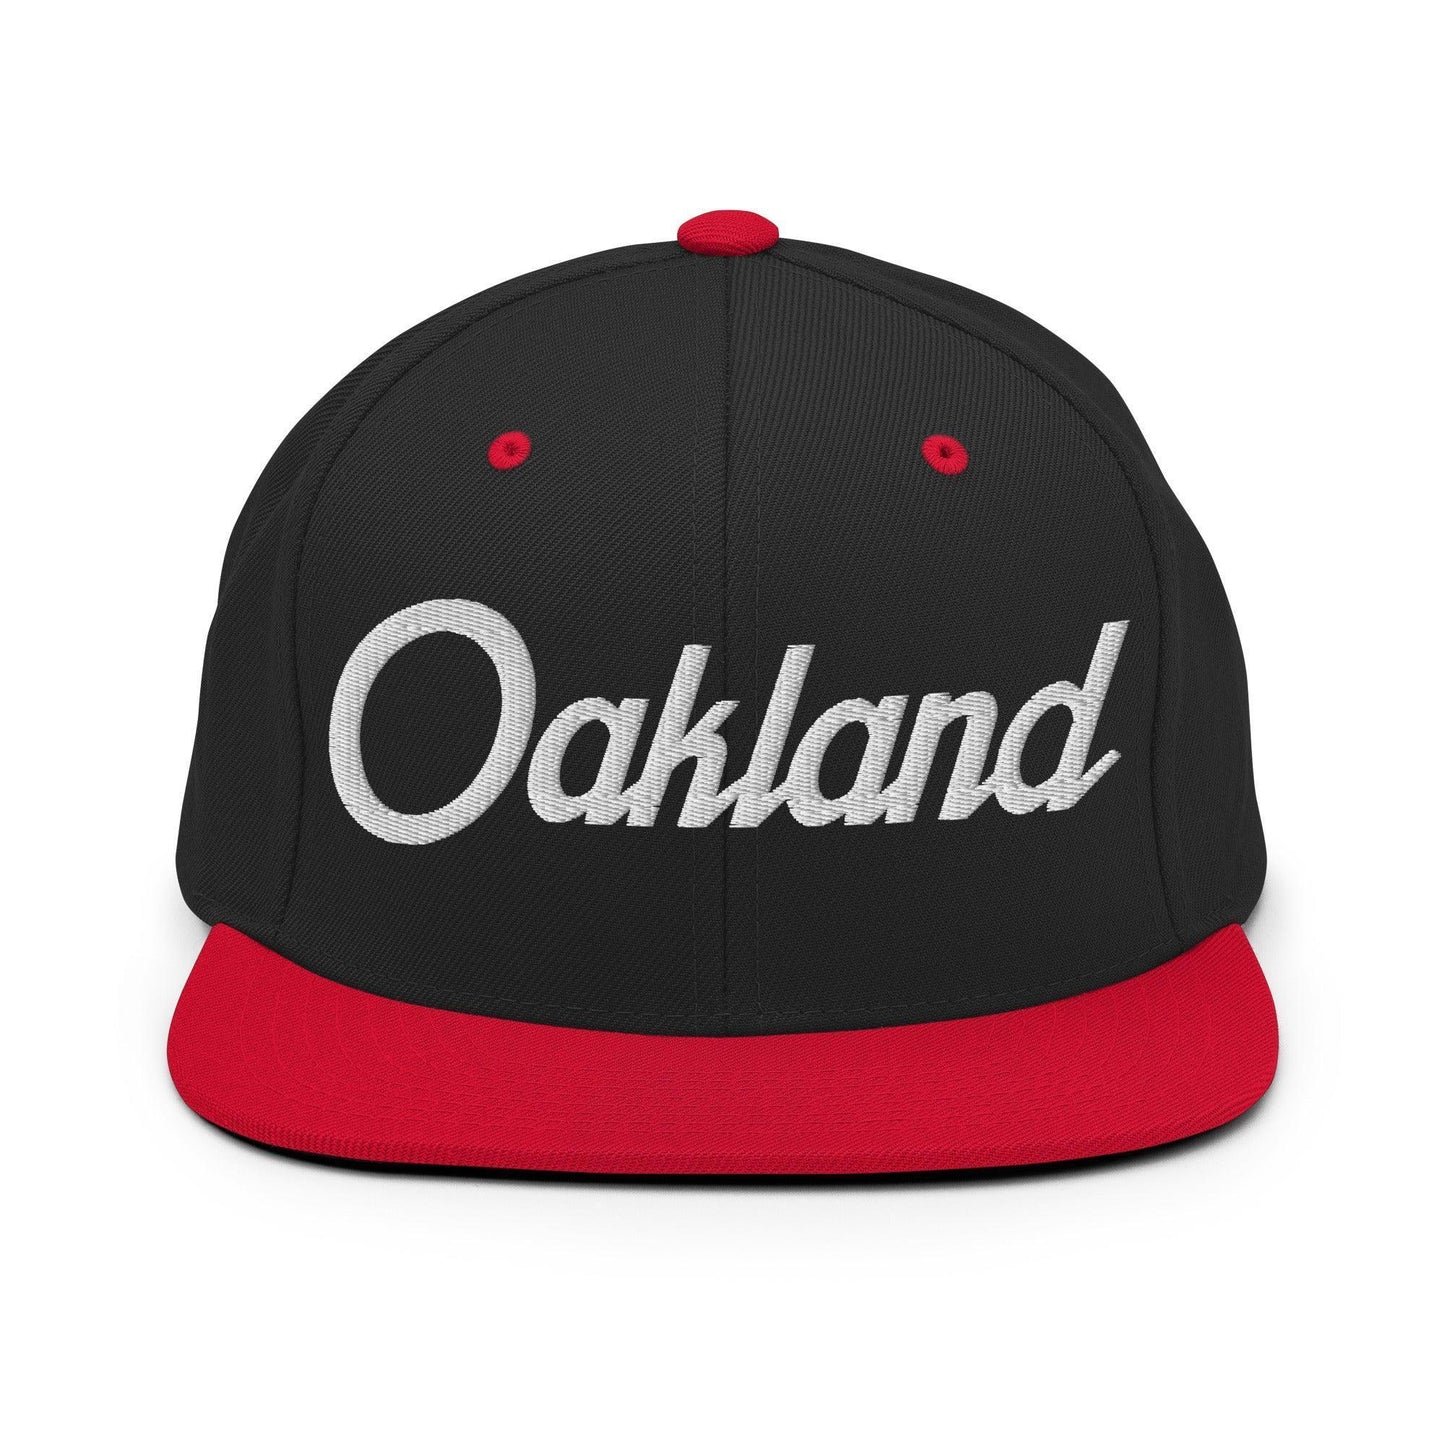 Oakland Script Snapback Hat Black/ Red